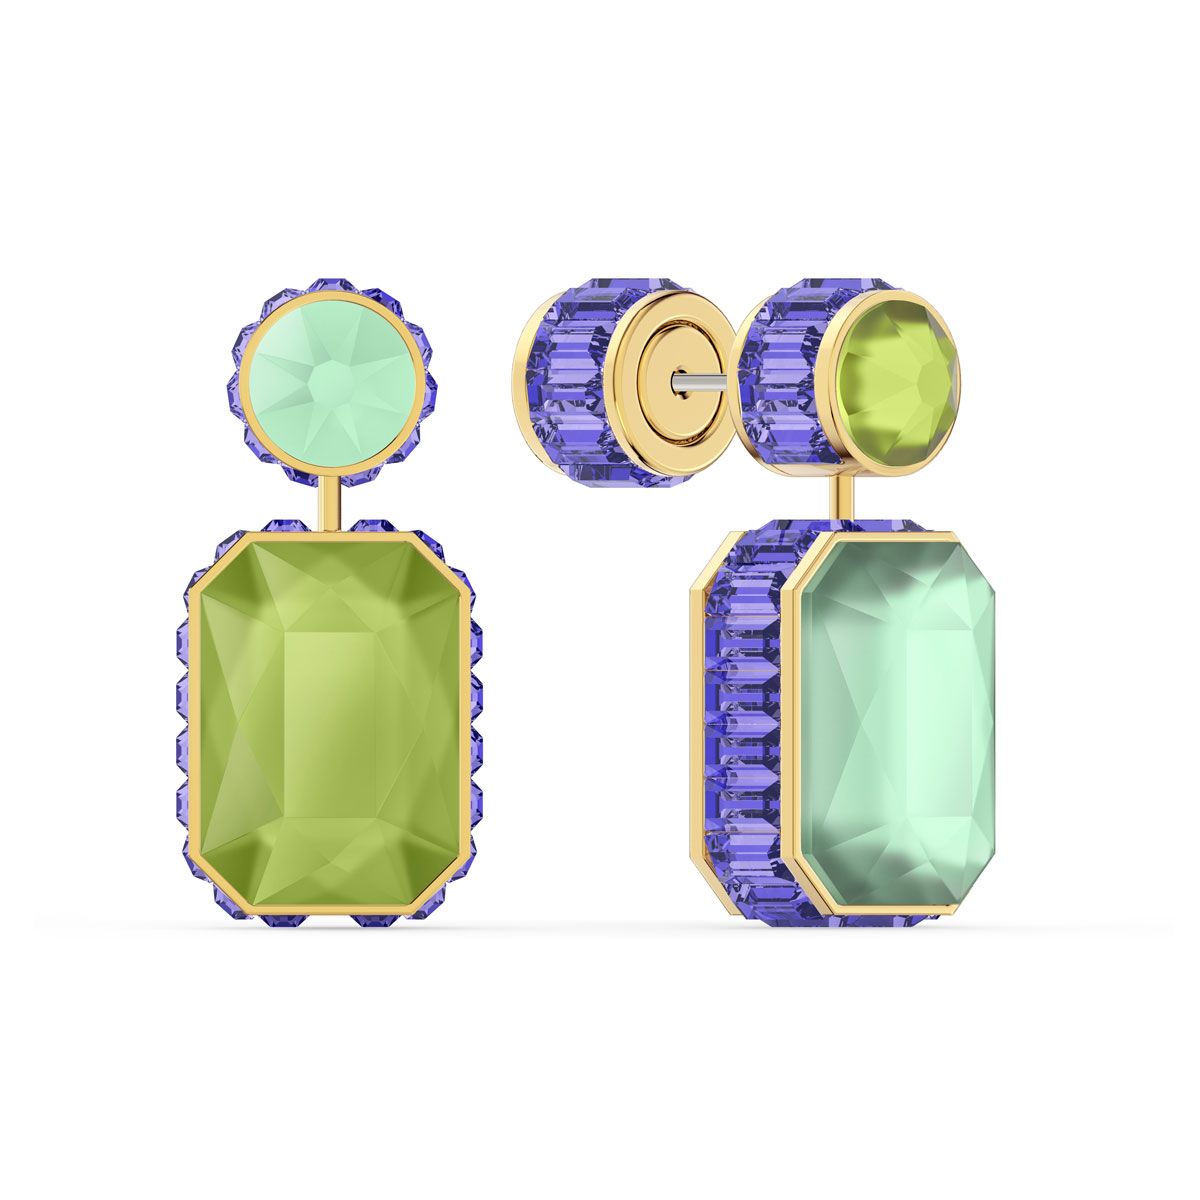 Swarovski Orbita Earrings, Asymmetrical, Octagon Cut Crystal, Multicolored, Gold-Tone Plated, Set